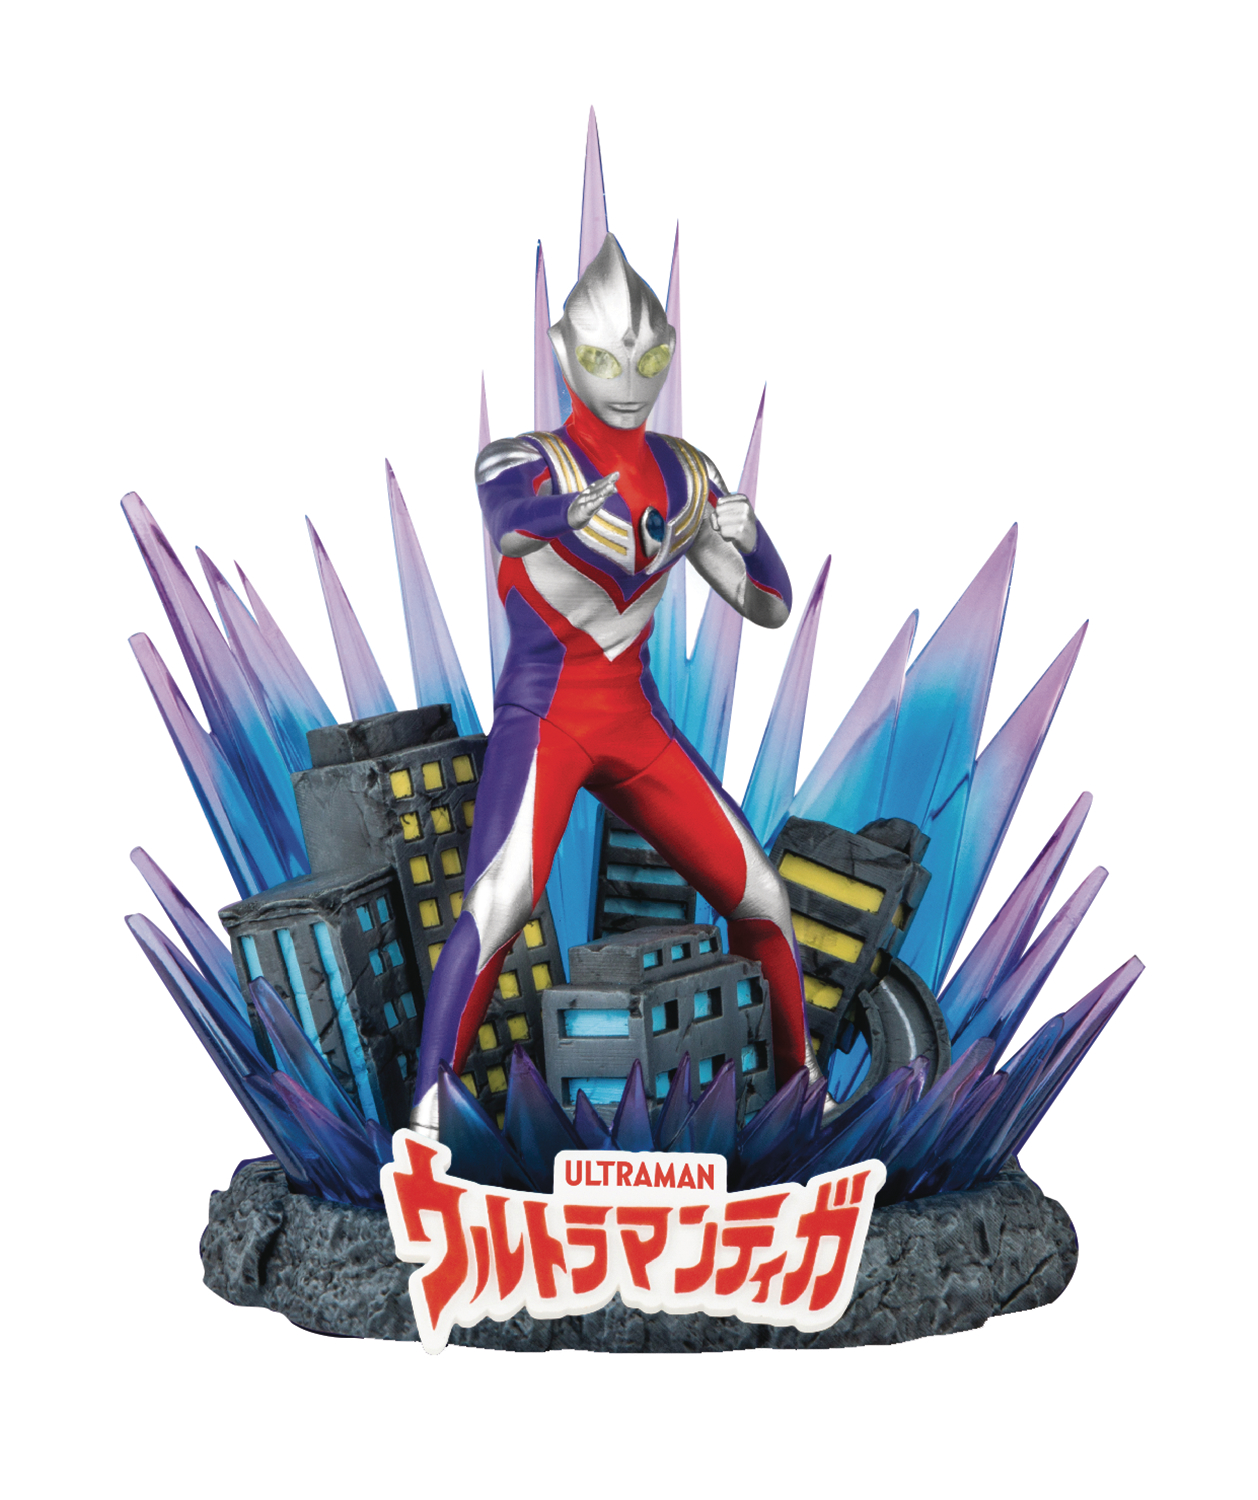 Ultraman Ds-113 Tiga Diorama Stage 6 Inch Statue